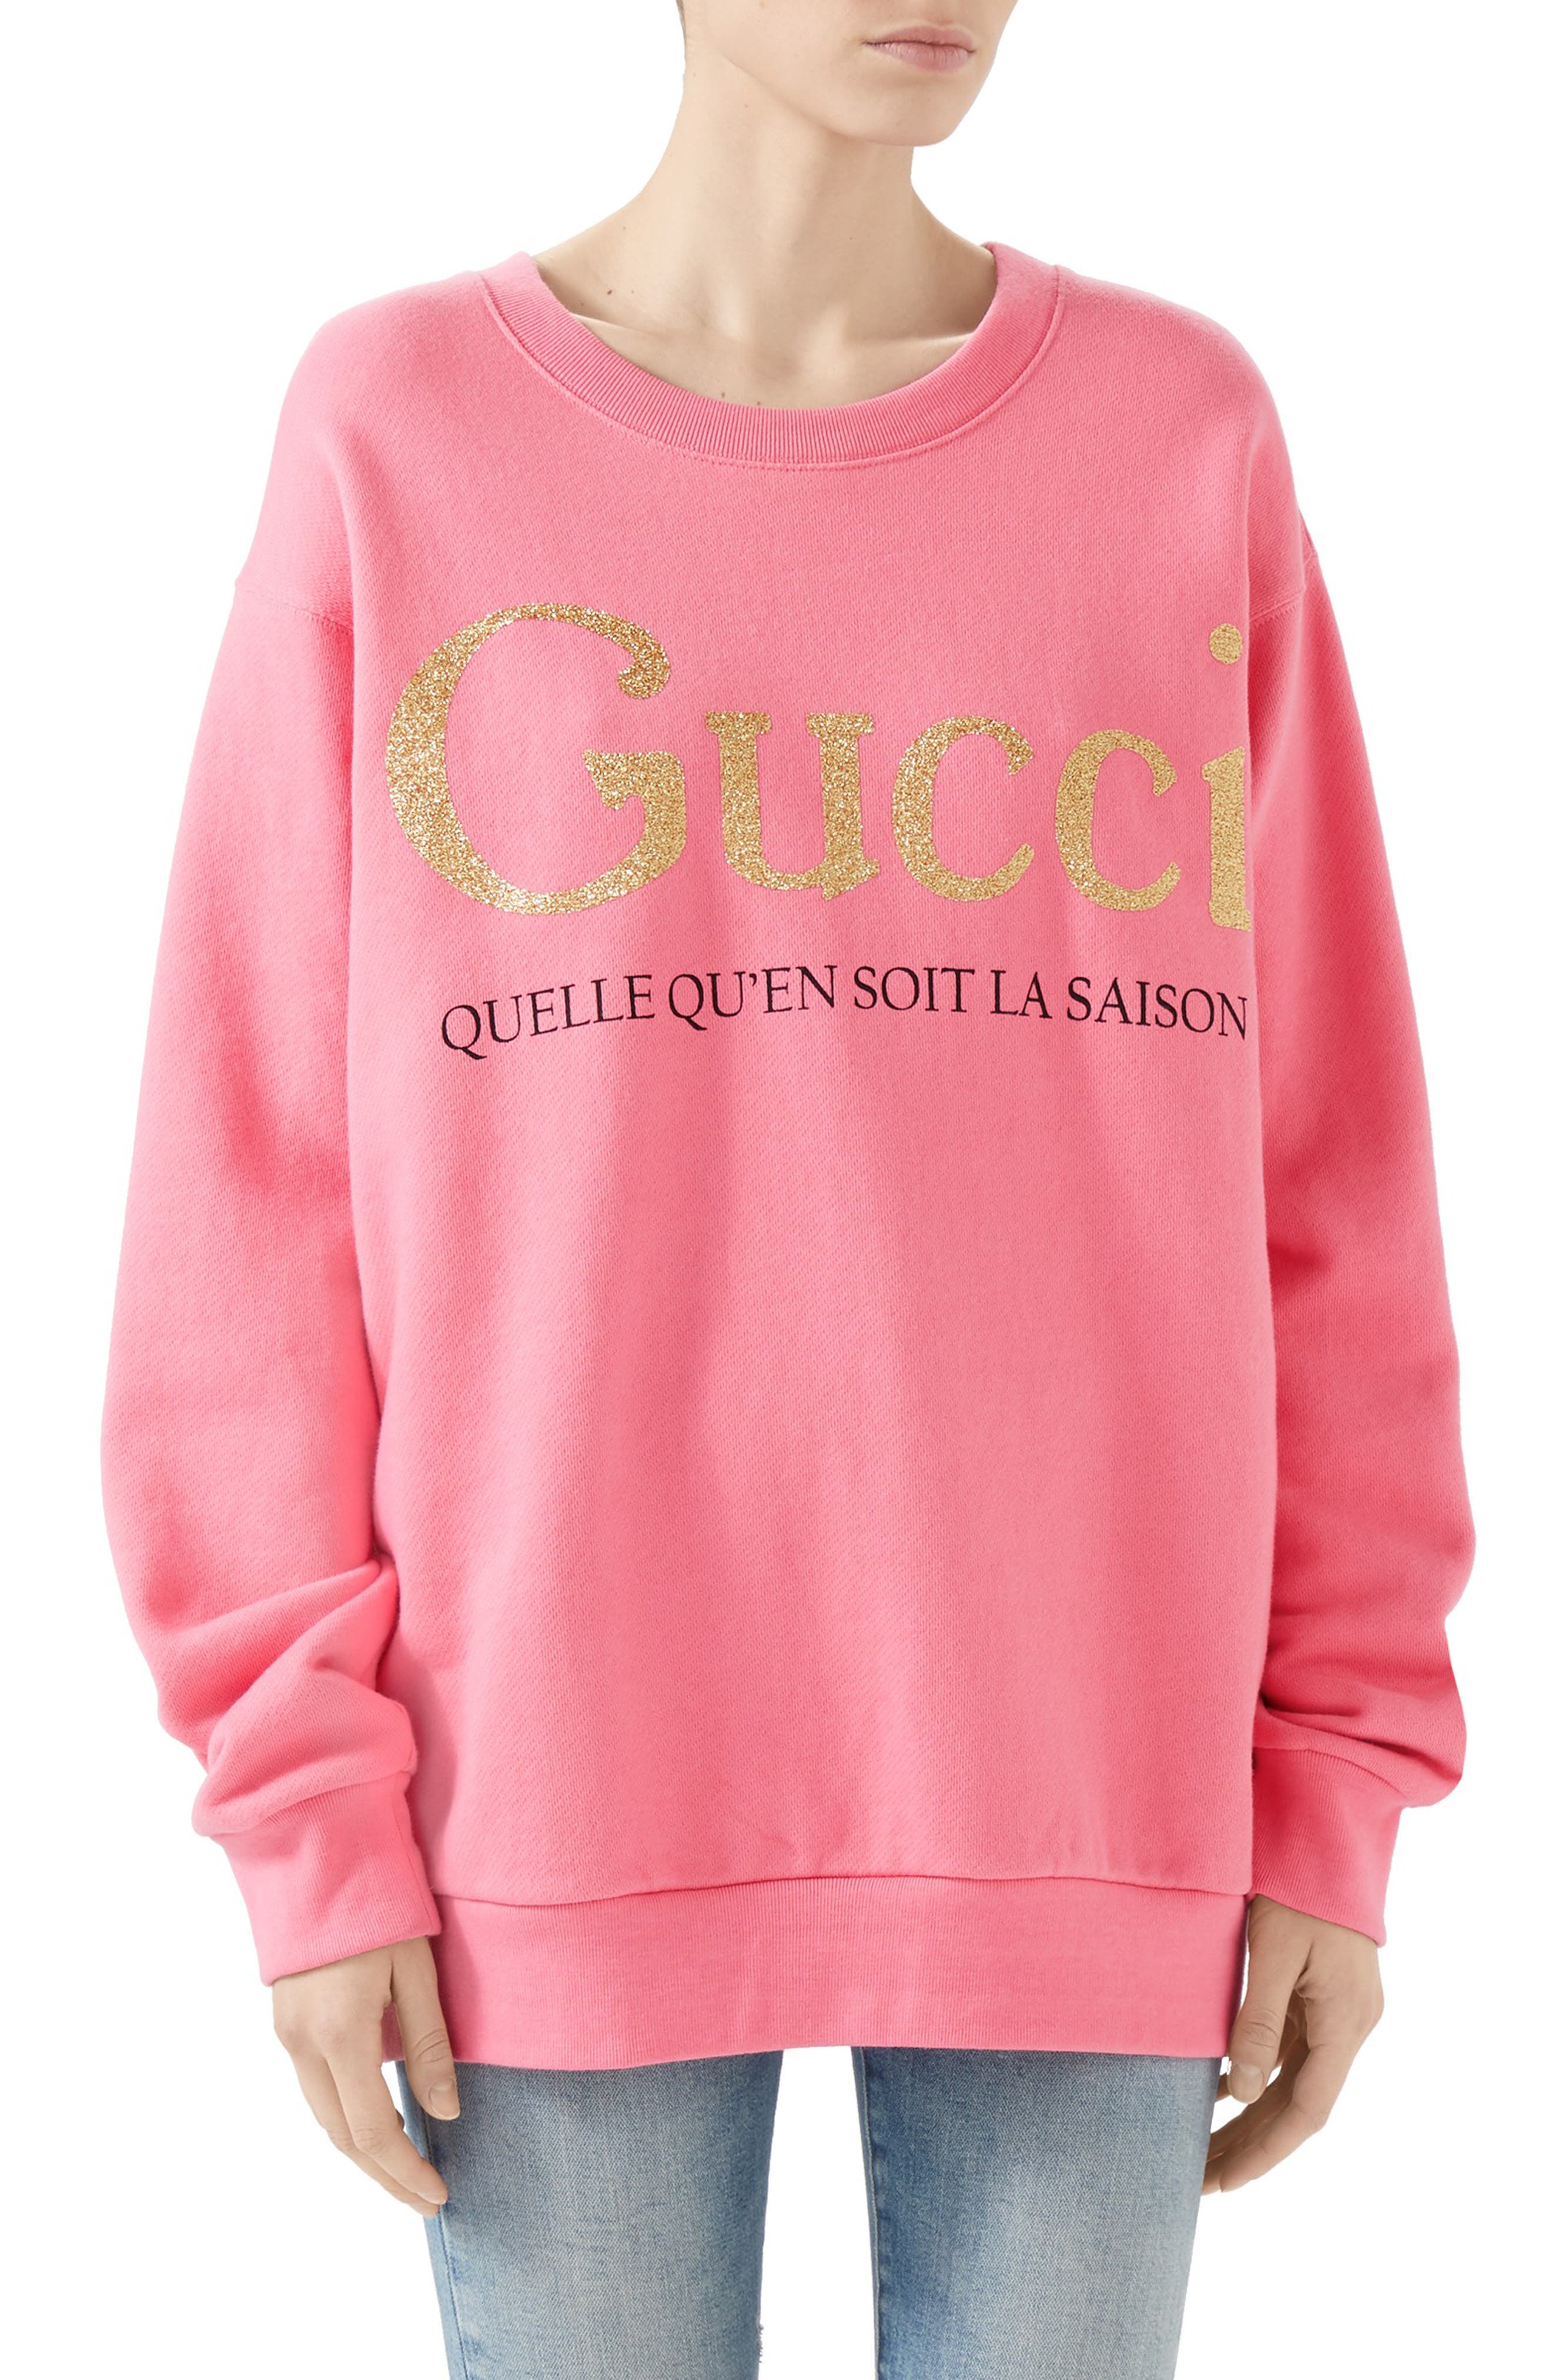 hot pink gucci sweatshirt